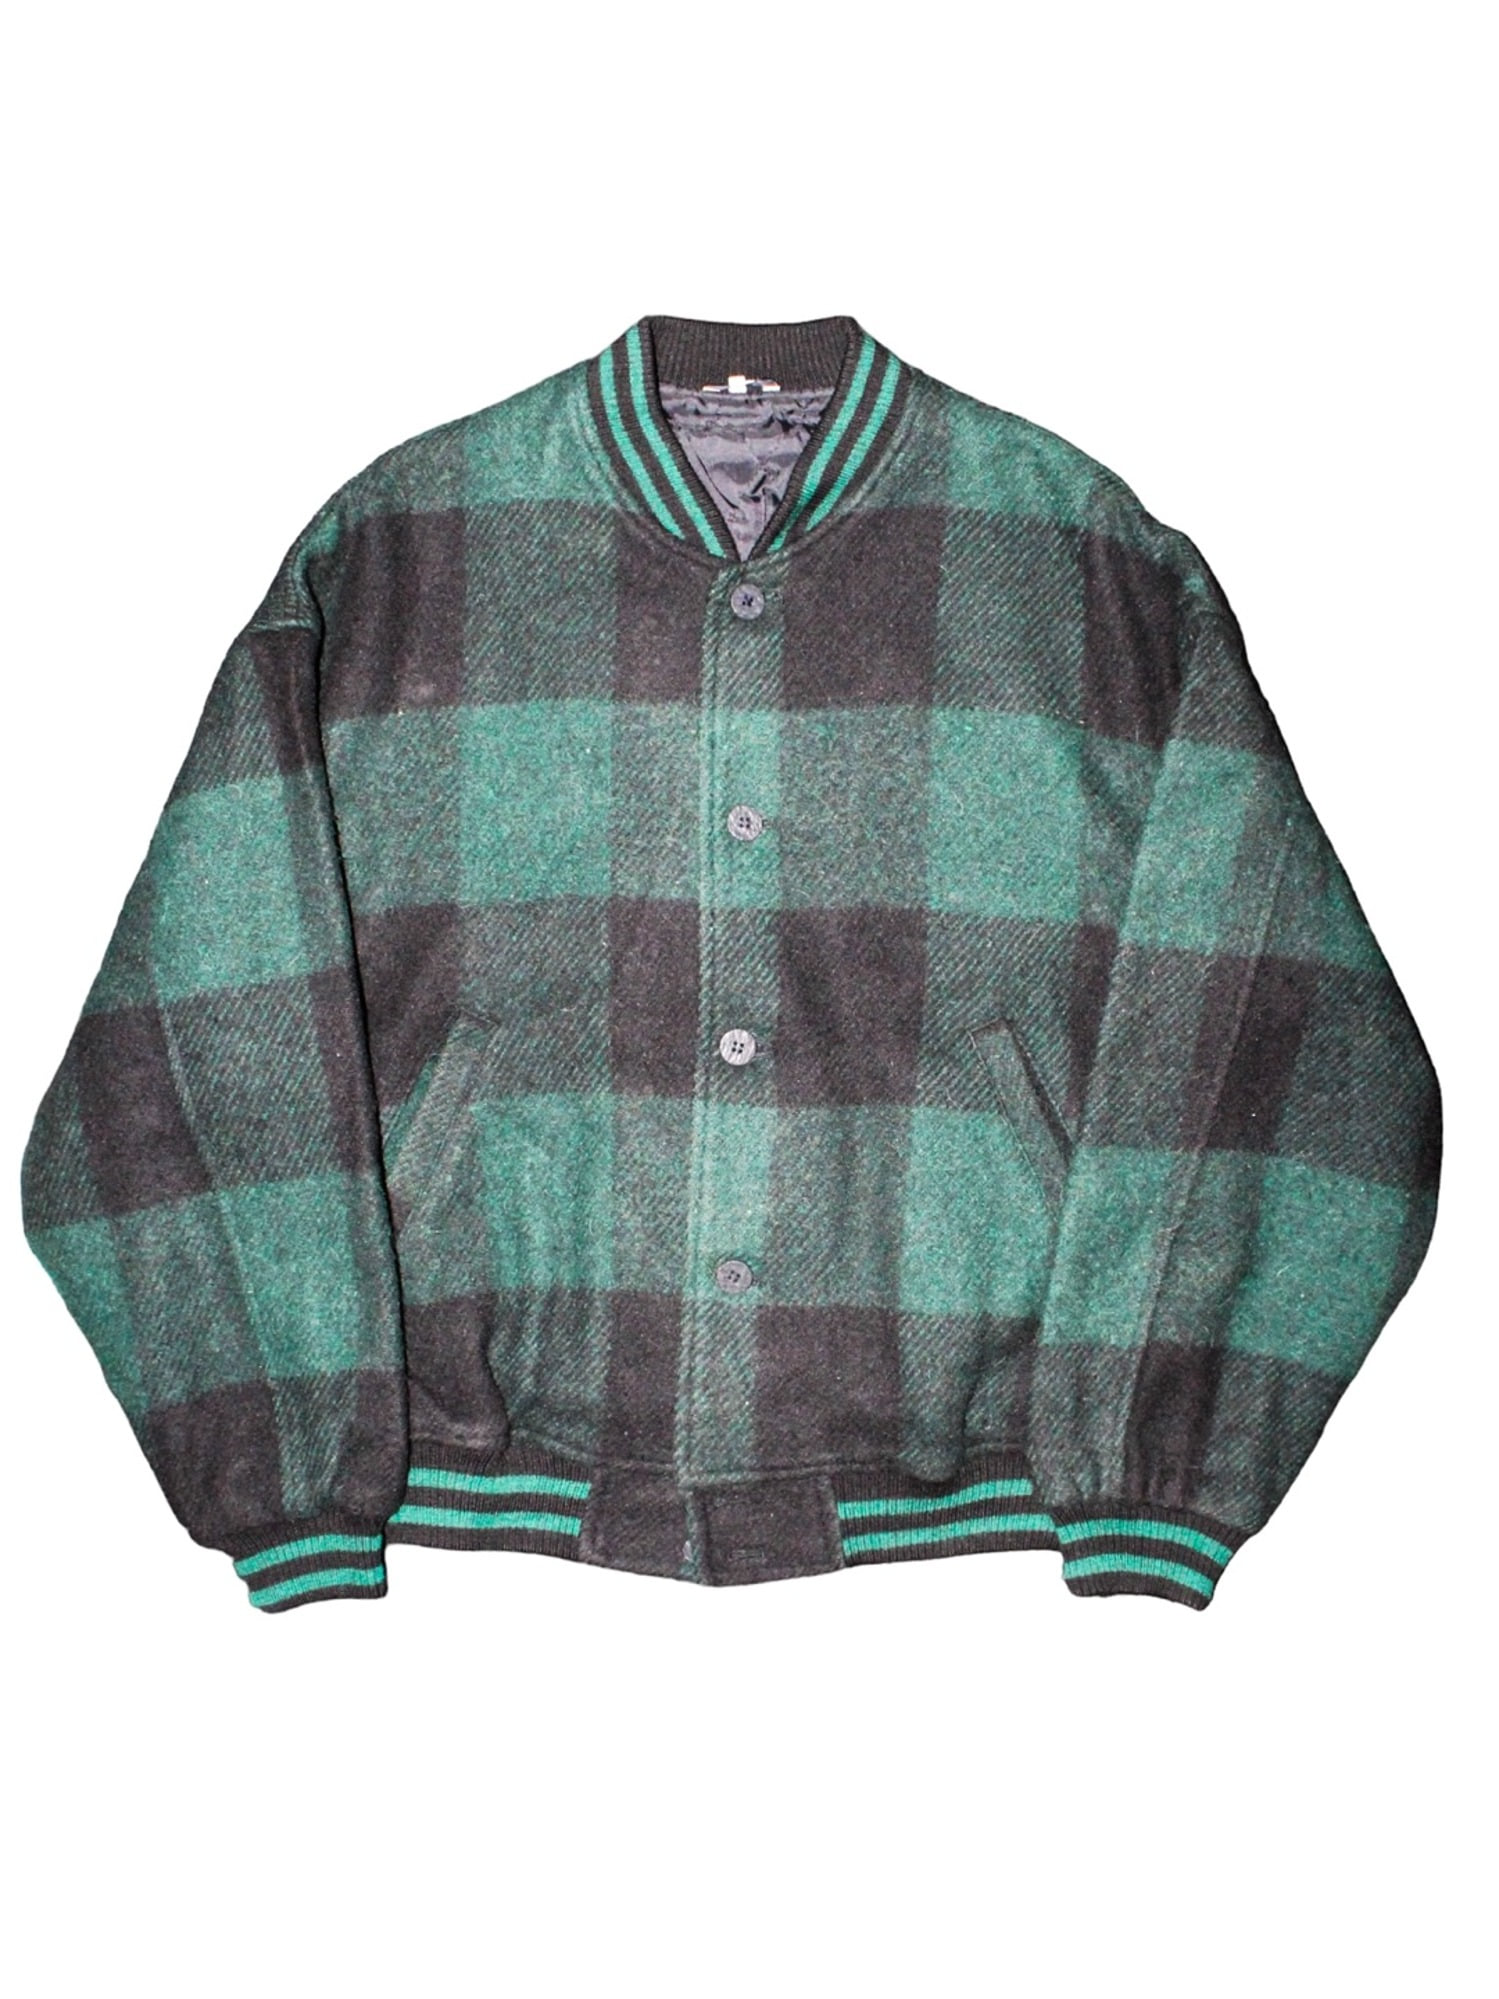 Vintage Overfit Checkboard Green Varsity Jacket